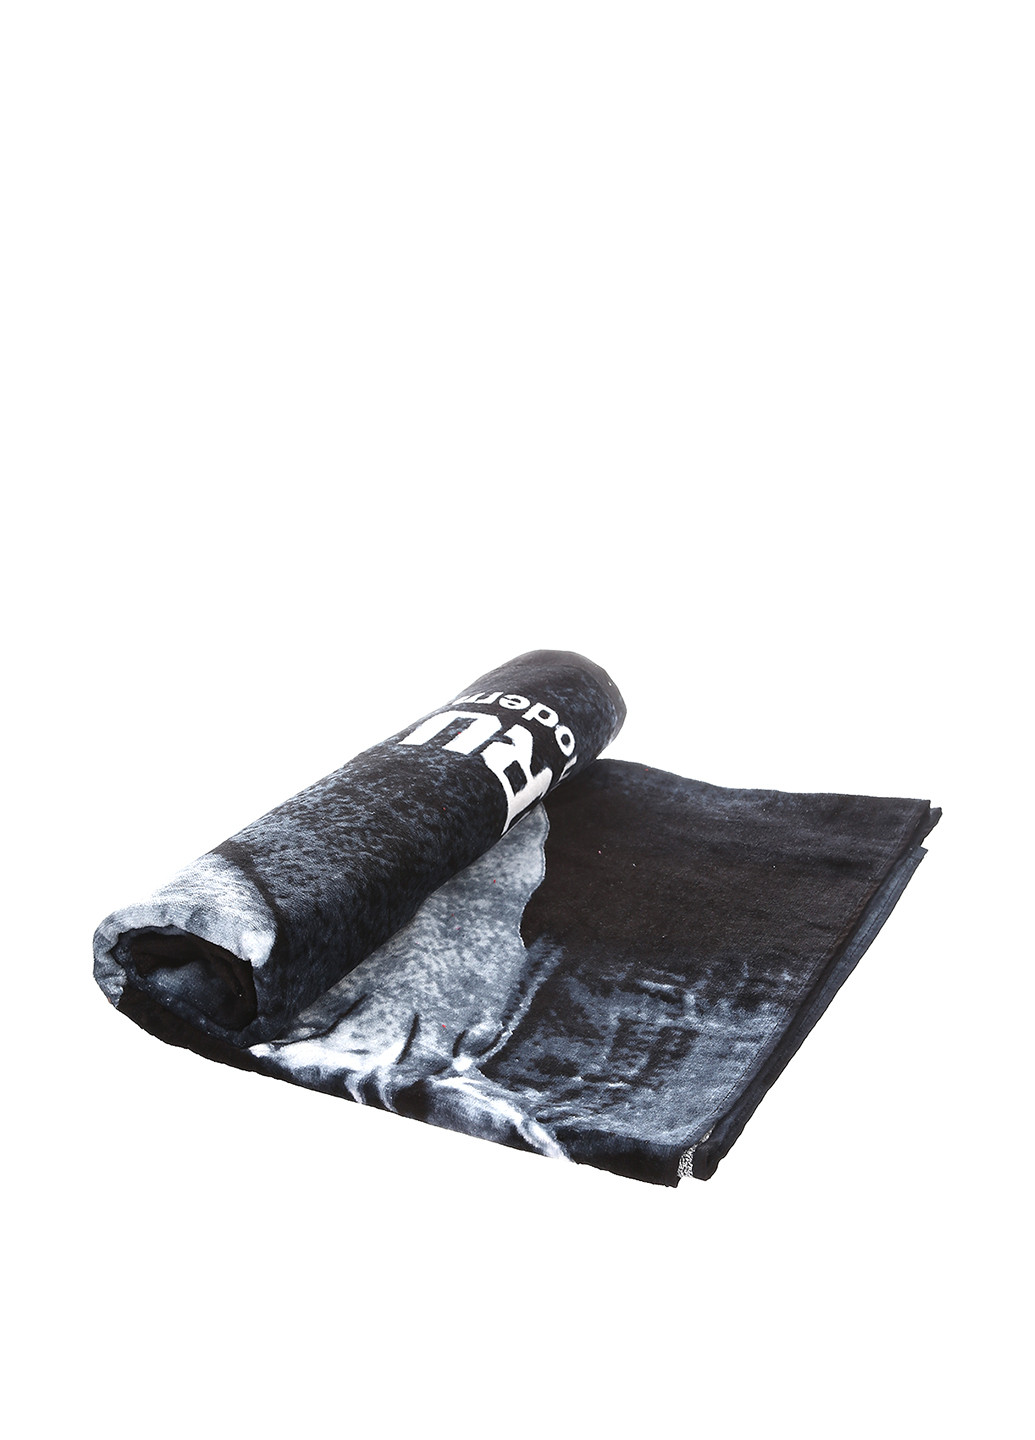 Ambruchi рушник, 188х103 см малюнок темно-синій виробництво - Китай